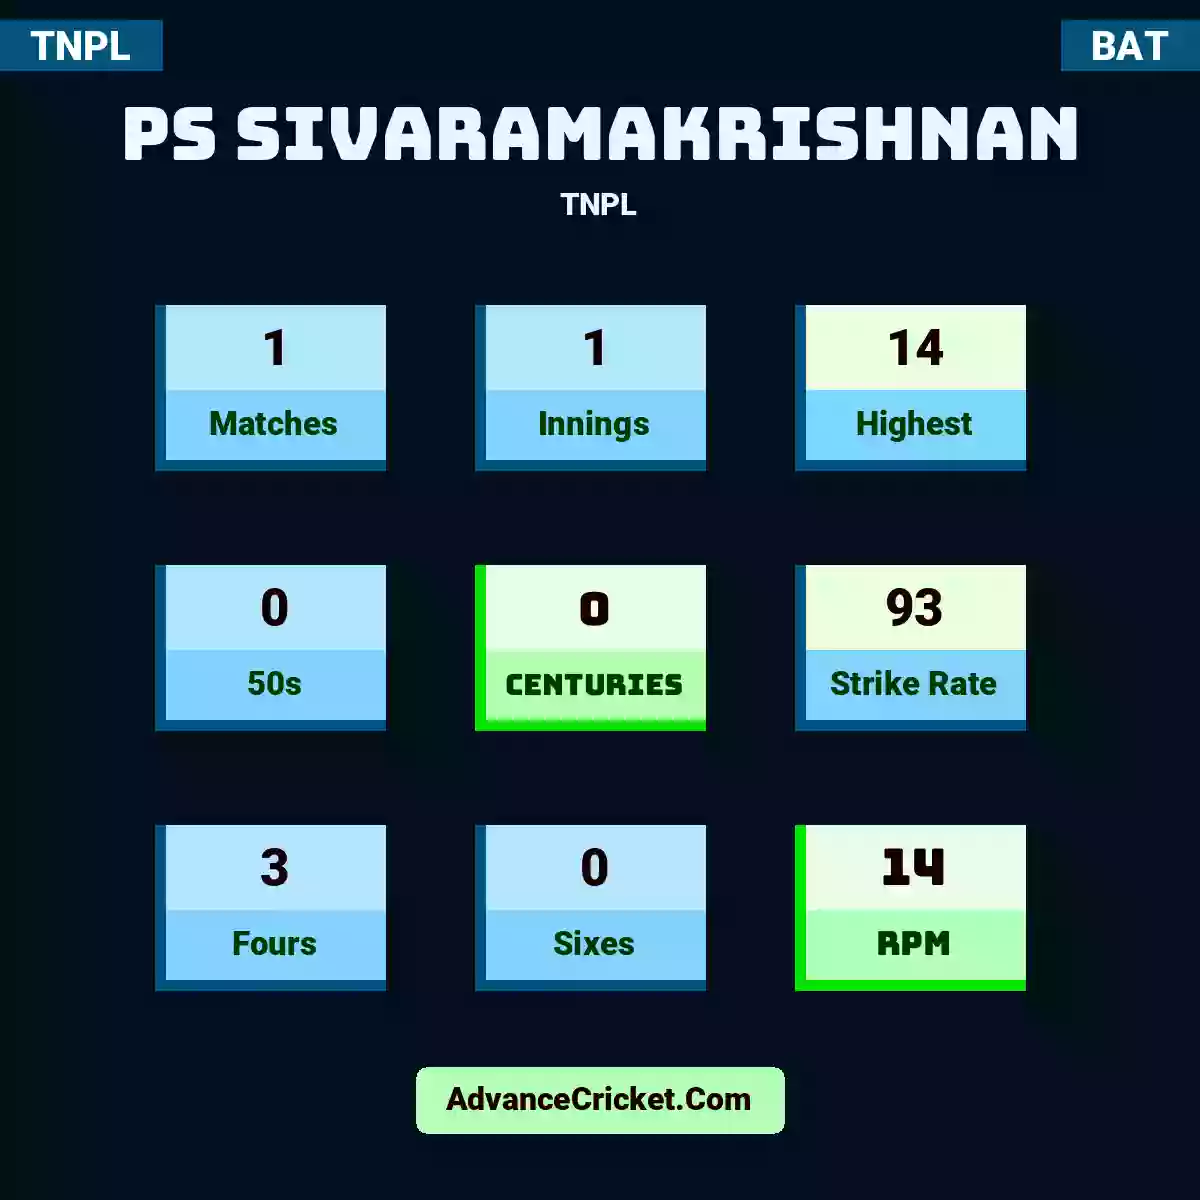 PS Sivaramakrishnan TNPL , PS Sivaramakrishnan played 1 matches, scored 14 runs as highest, 0 half-centuries, and 0 centuries, with a strike rate of 93. P.Sivaramakrishnan hit 3 fours and 0 sixes, with an RPM of 14.